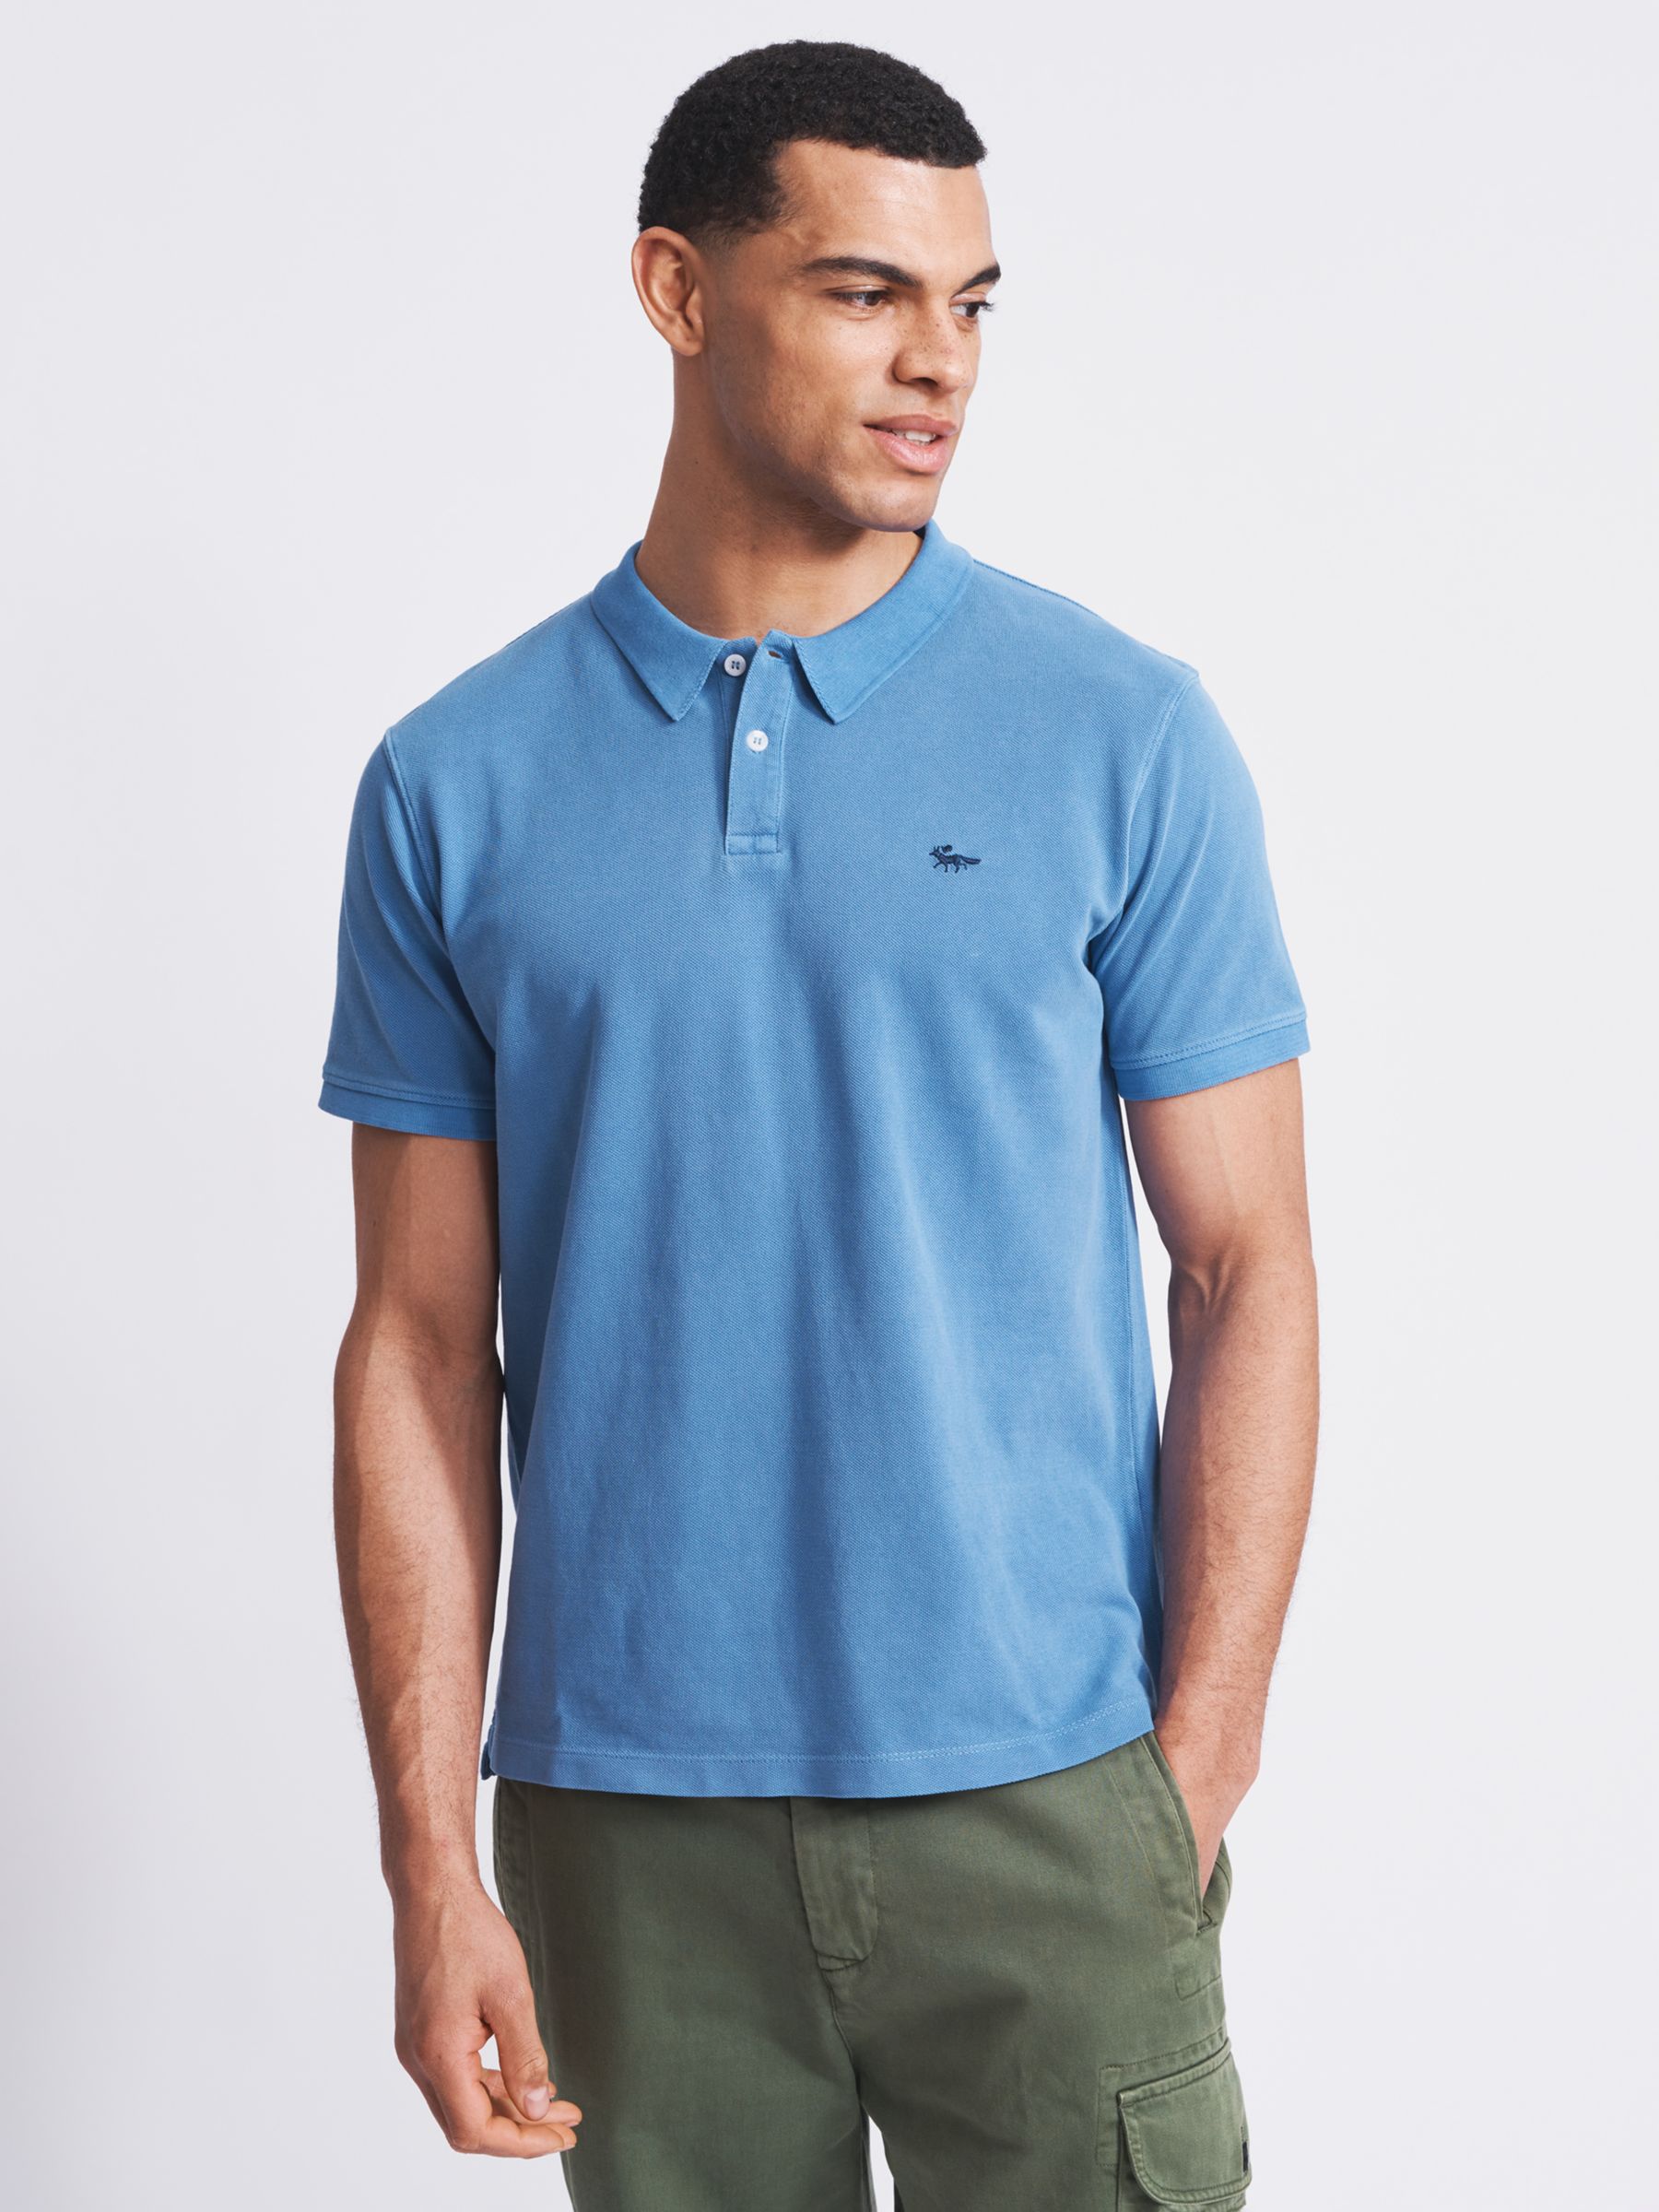 Aubin Hanby Pique Short Sleeve Polo Shirt, Pale Blue, S